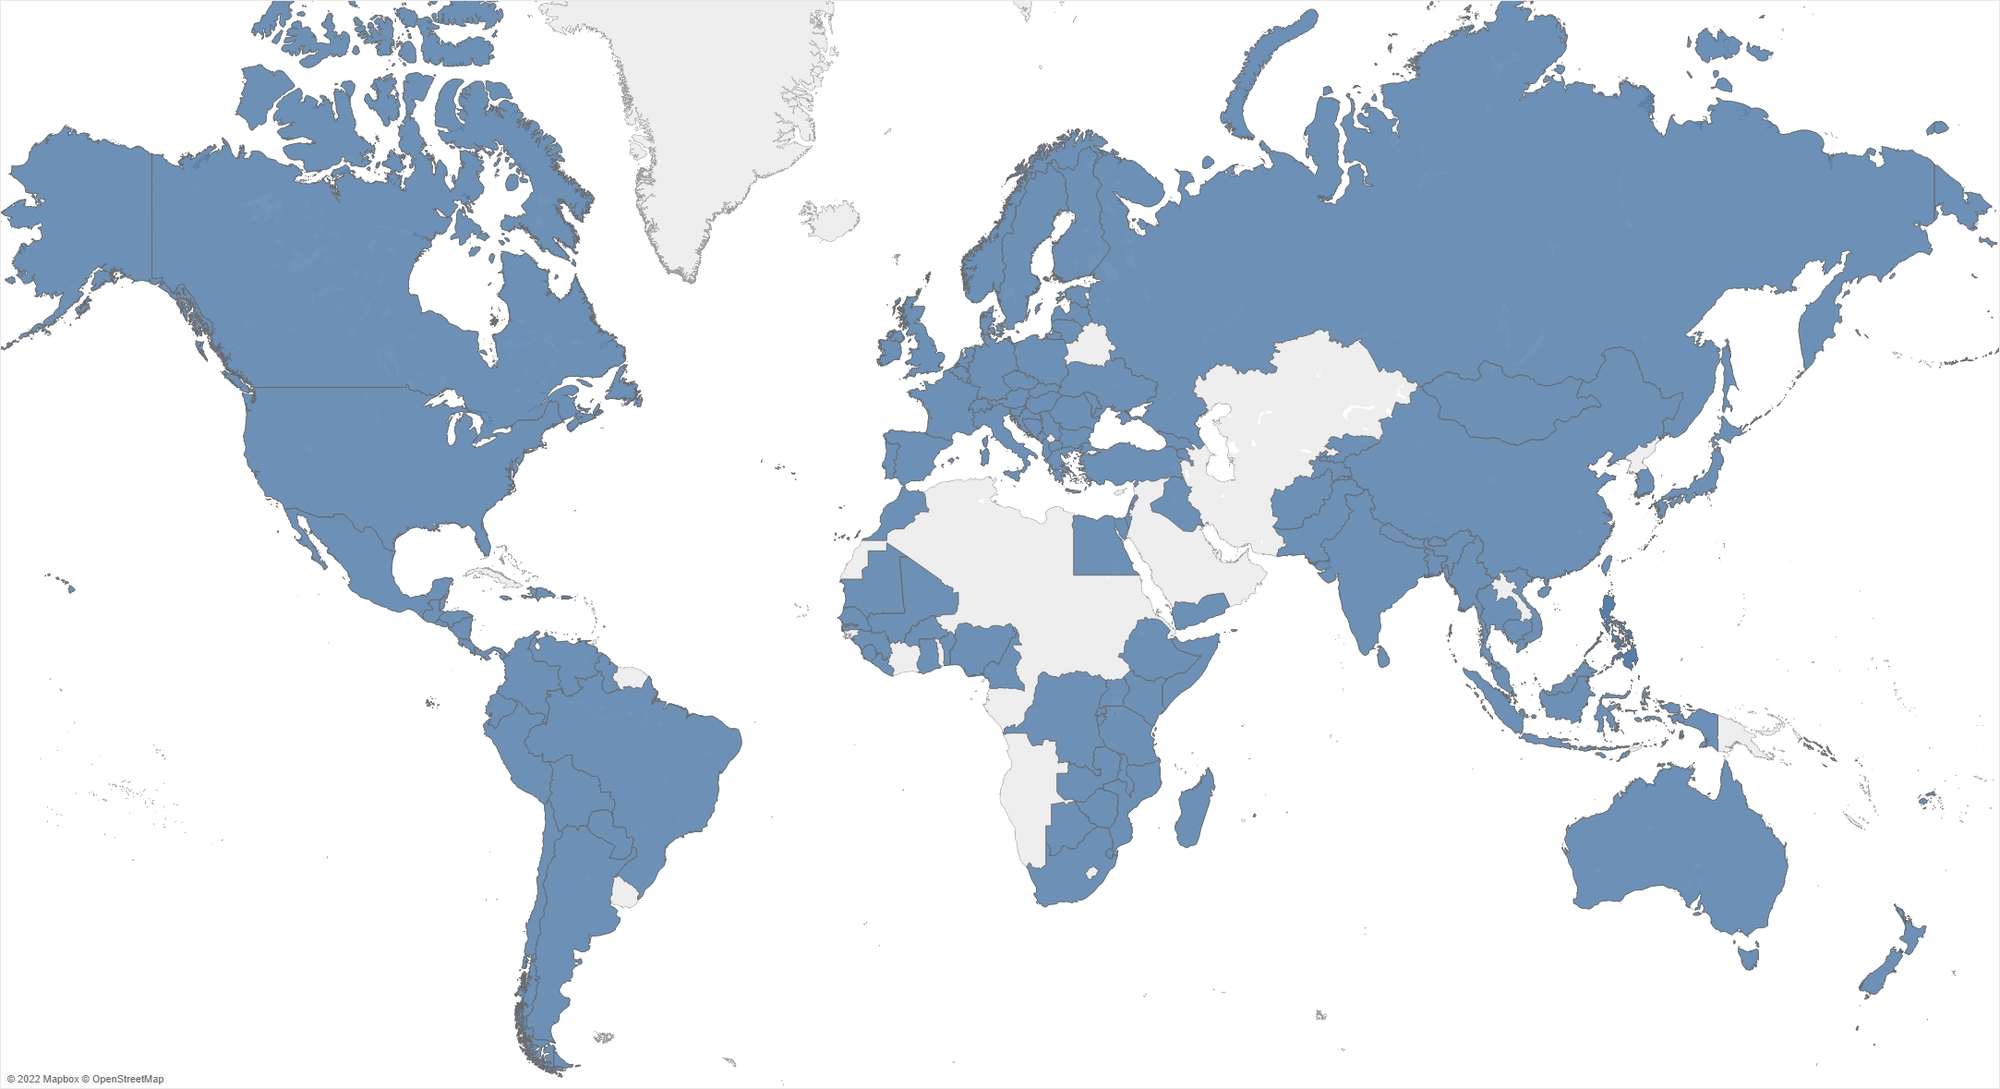 Tableau Foundation footprint globally